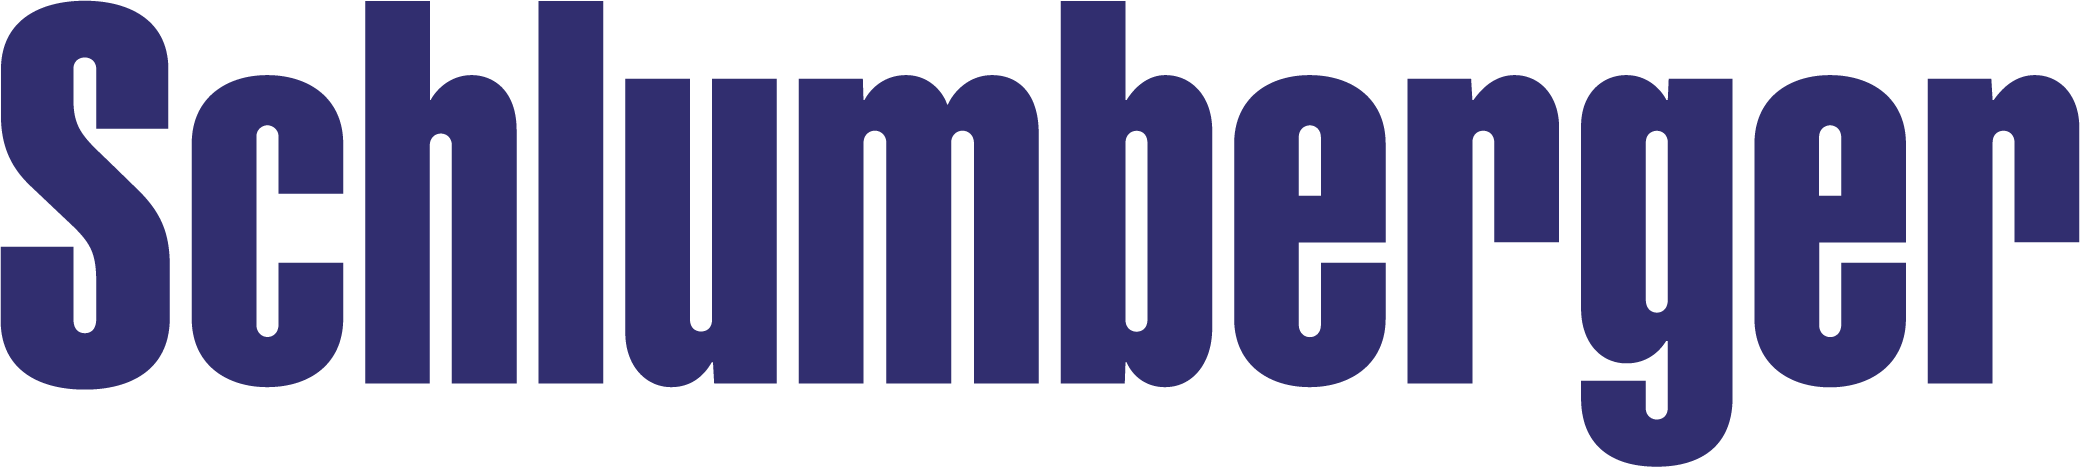 Schlumberger_logo